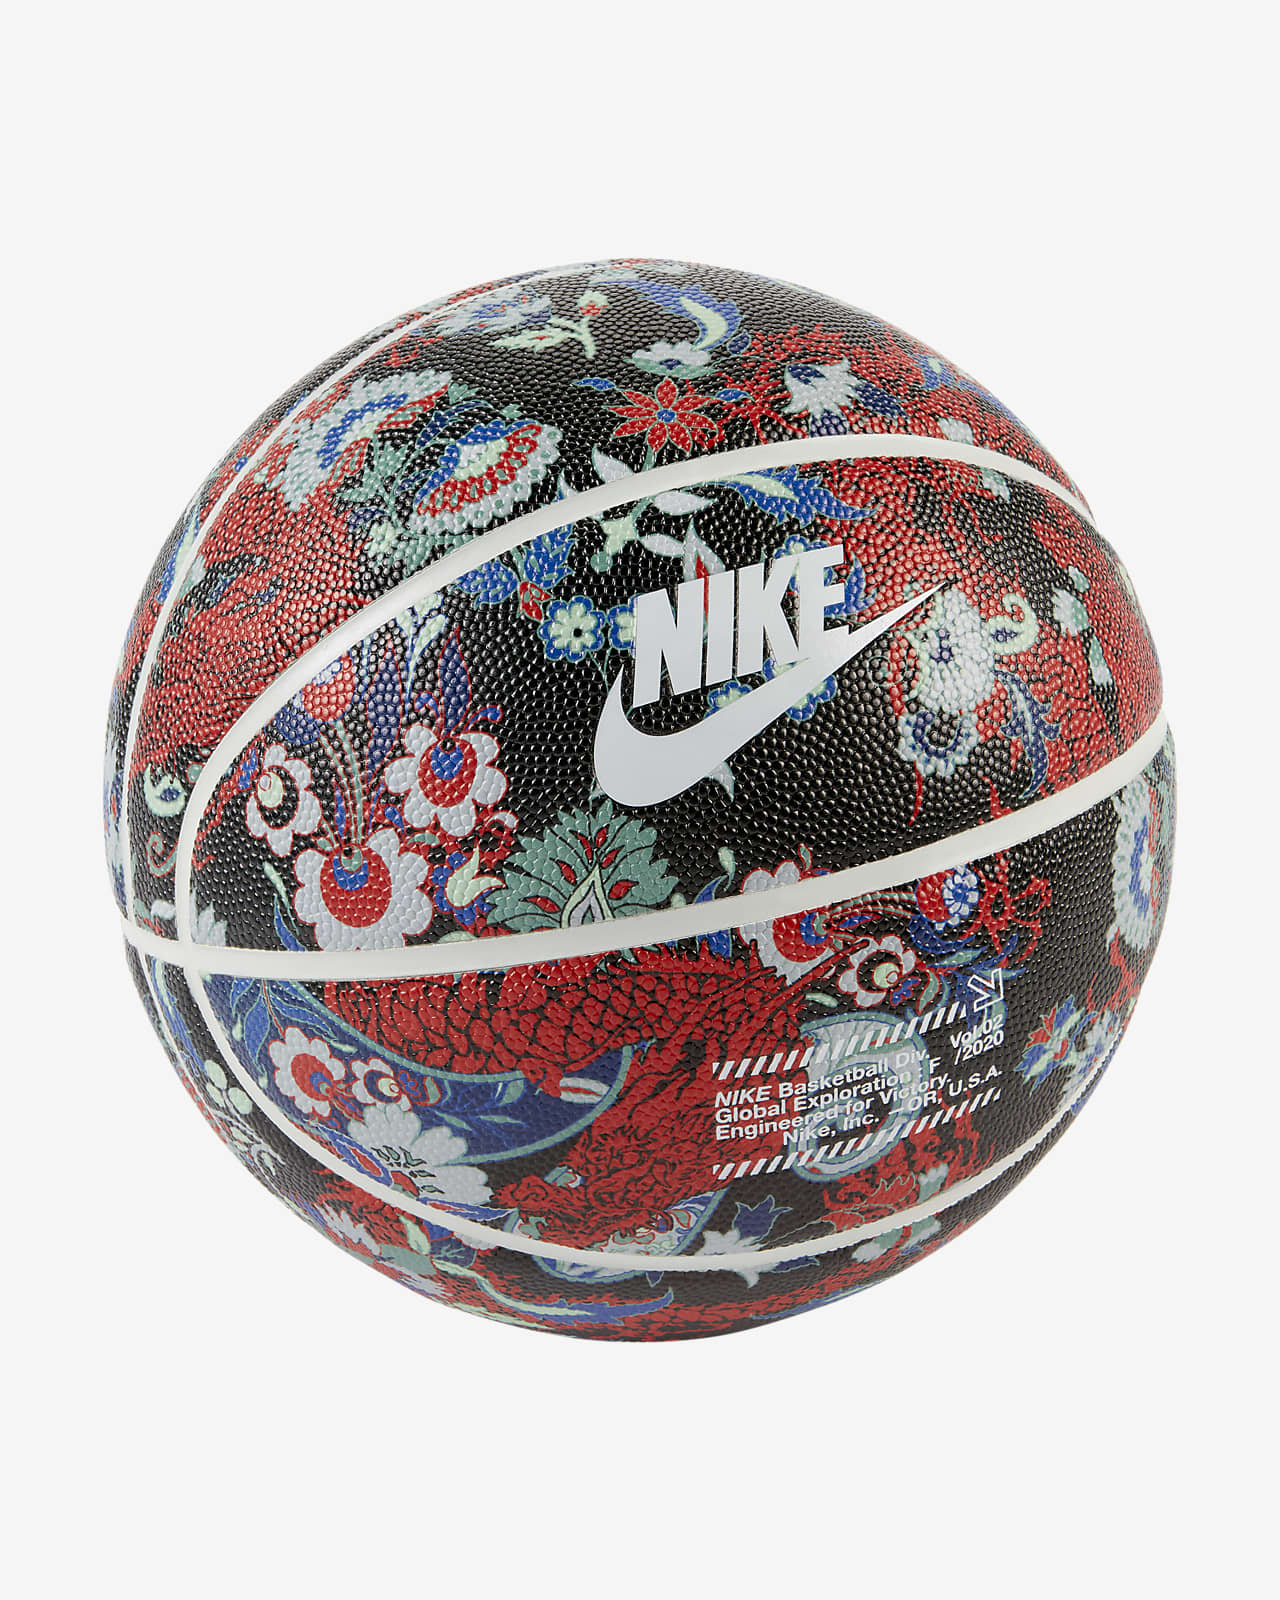 Nike Global Exploration (East) 篮球